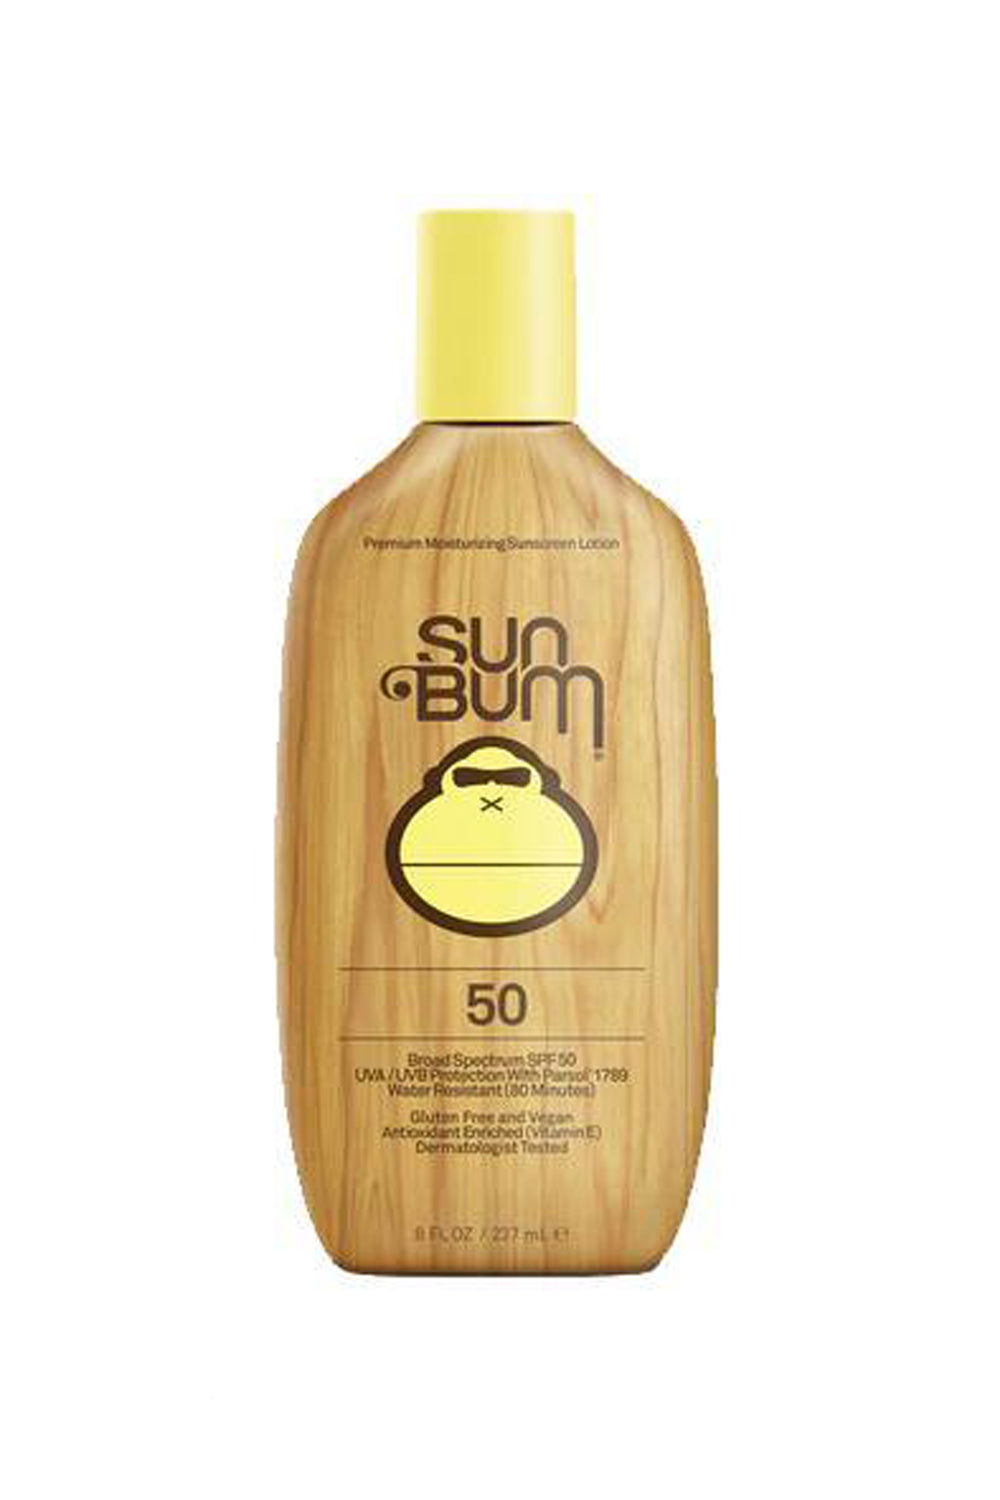 Sun Bum - Original Lotion SPF 50 Sunscreen 237ml